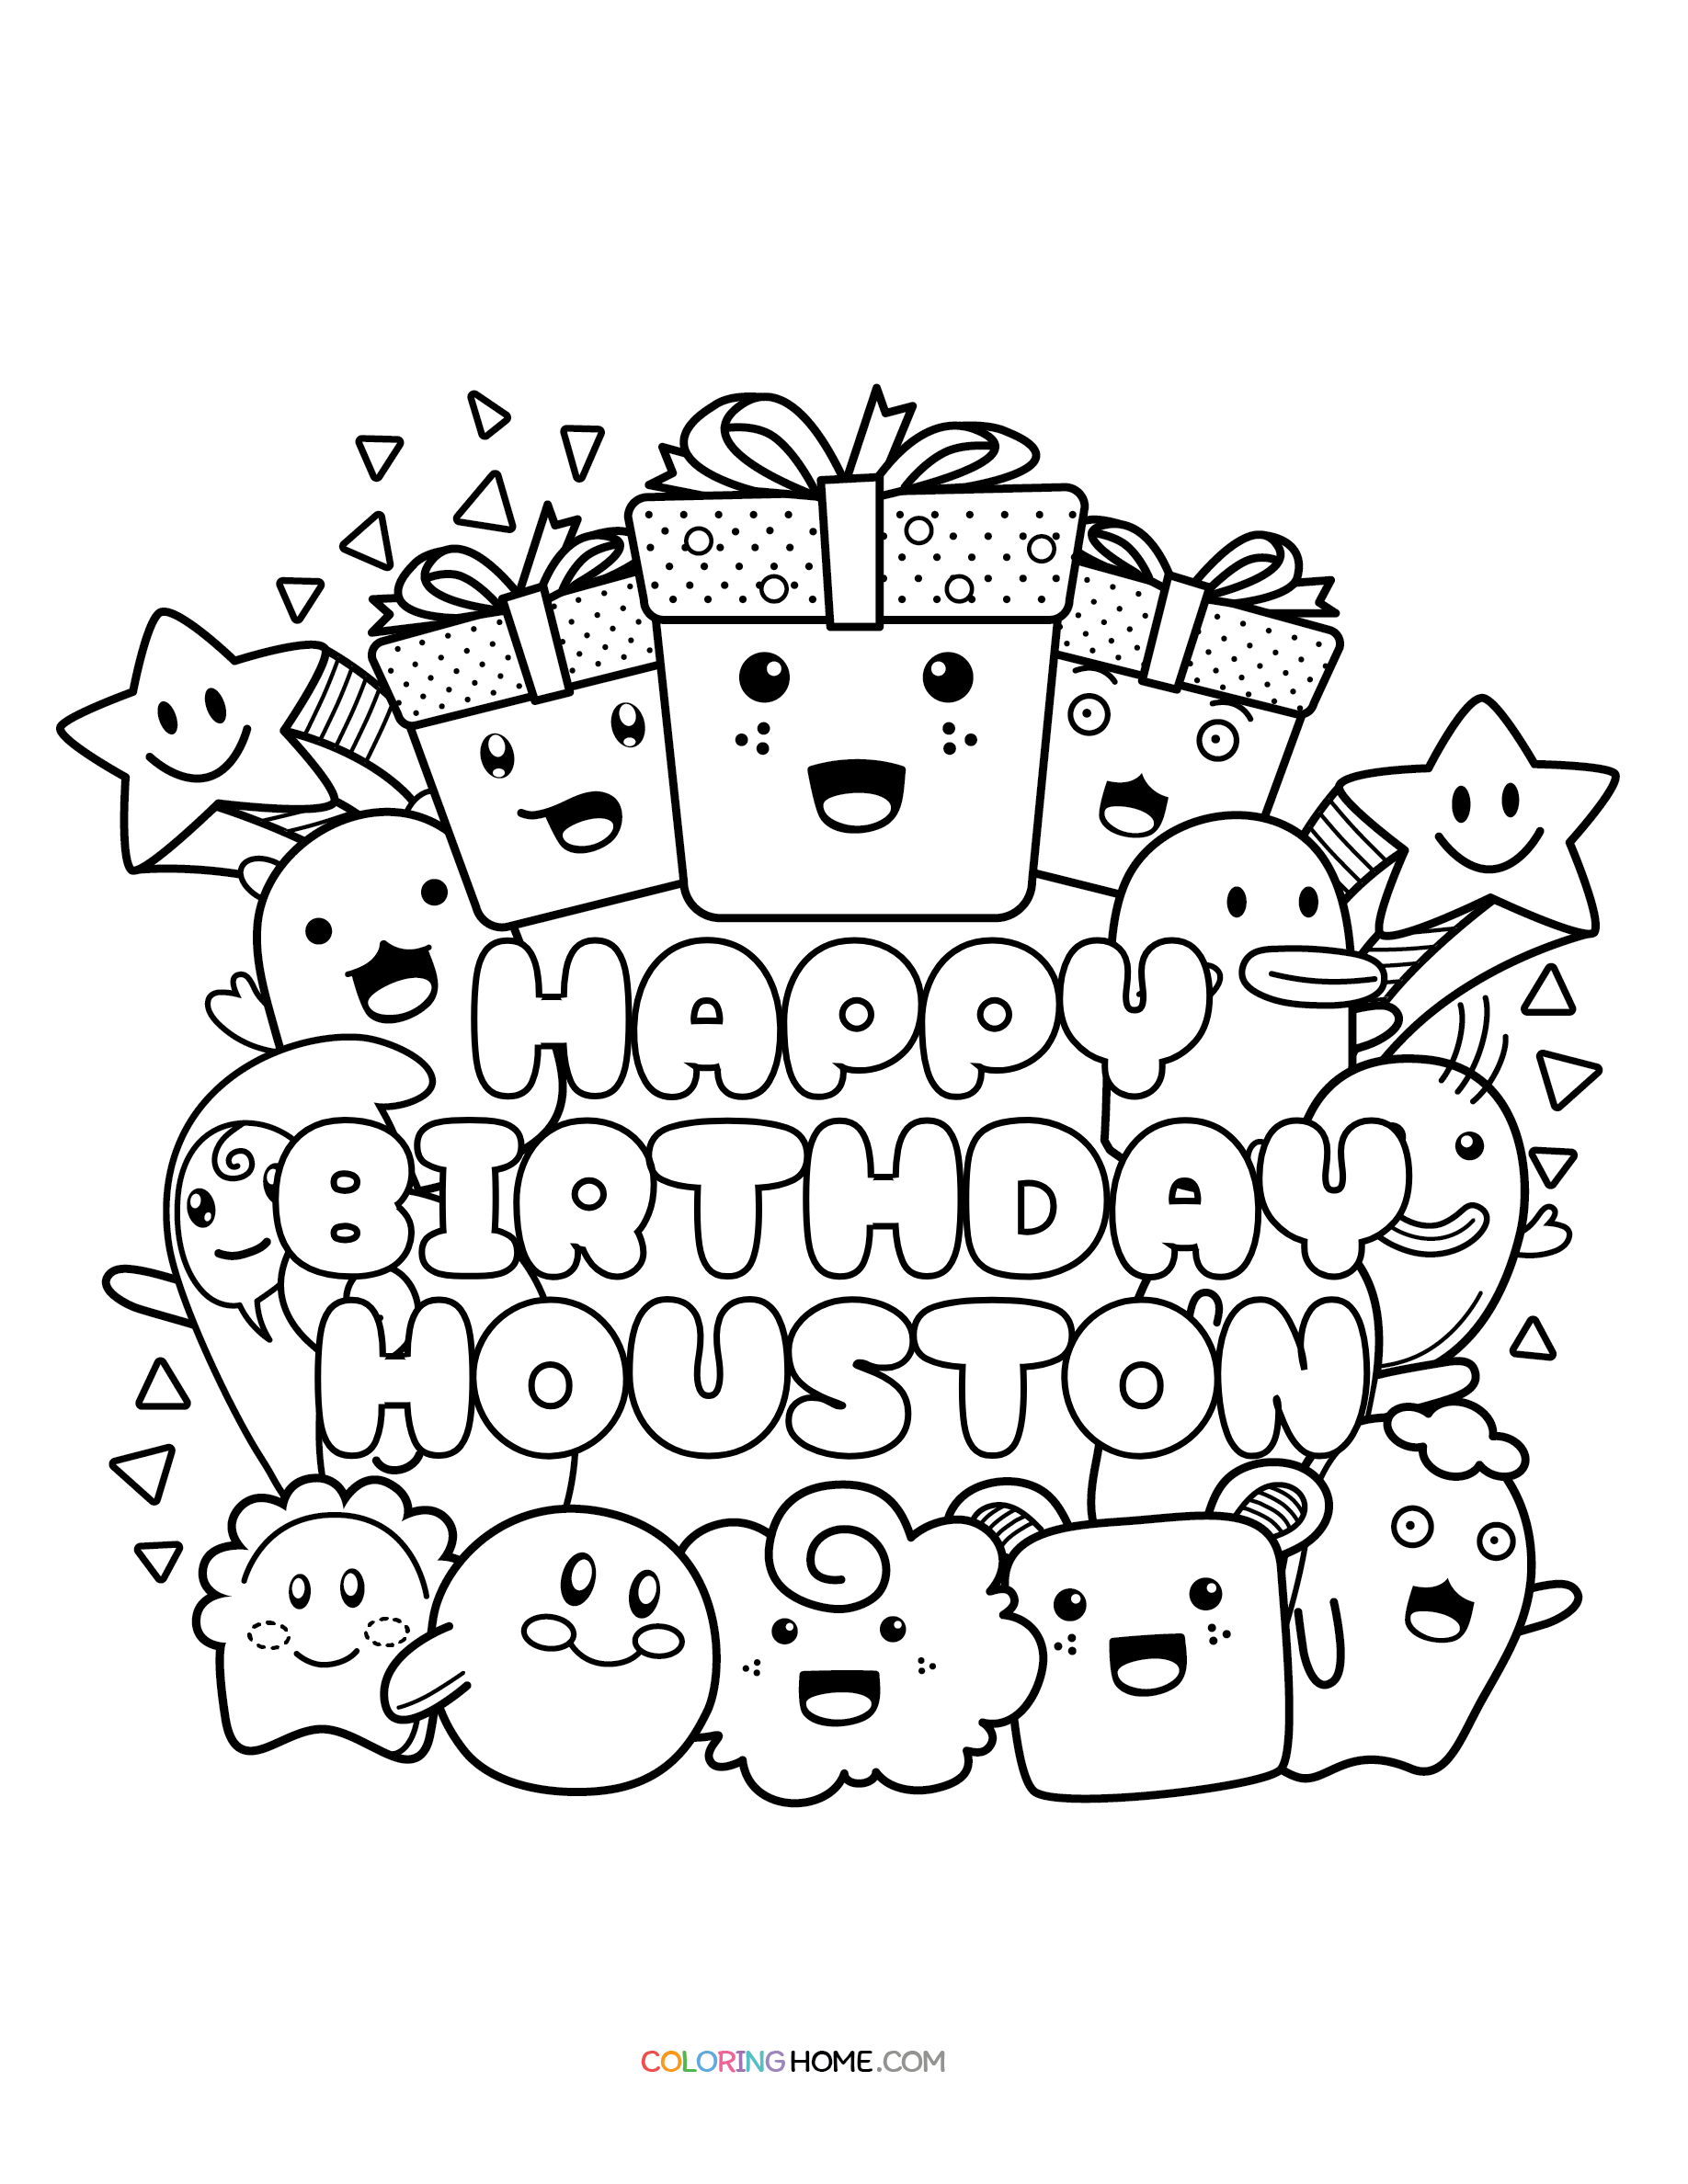 Happy Birthday Houston coloring page